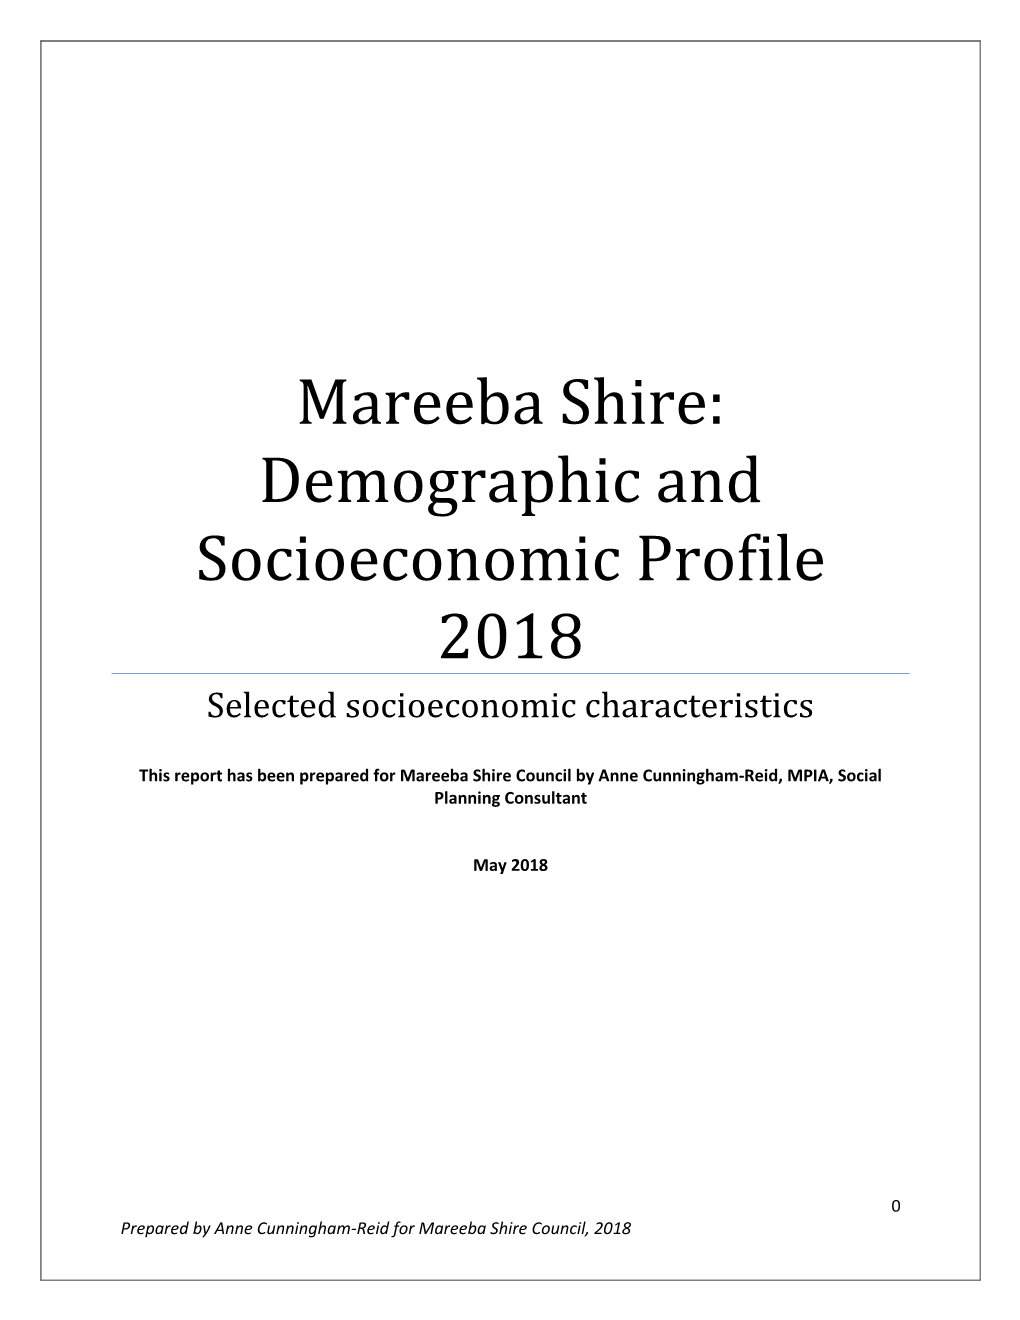 Mareeba Shire: Demographic and Socioeconomic Profile 2018 Selected Socioeconomic Characteristics